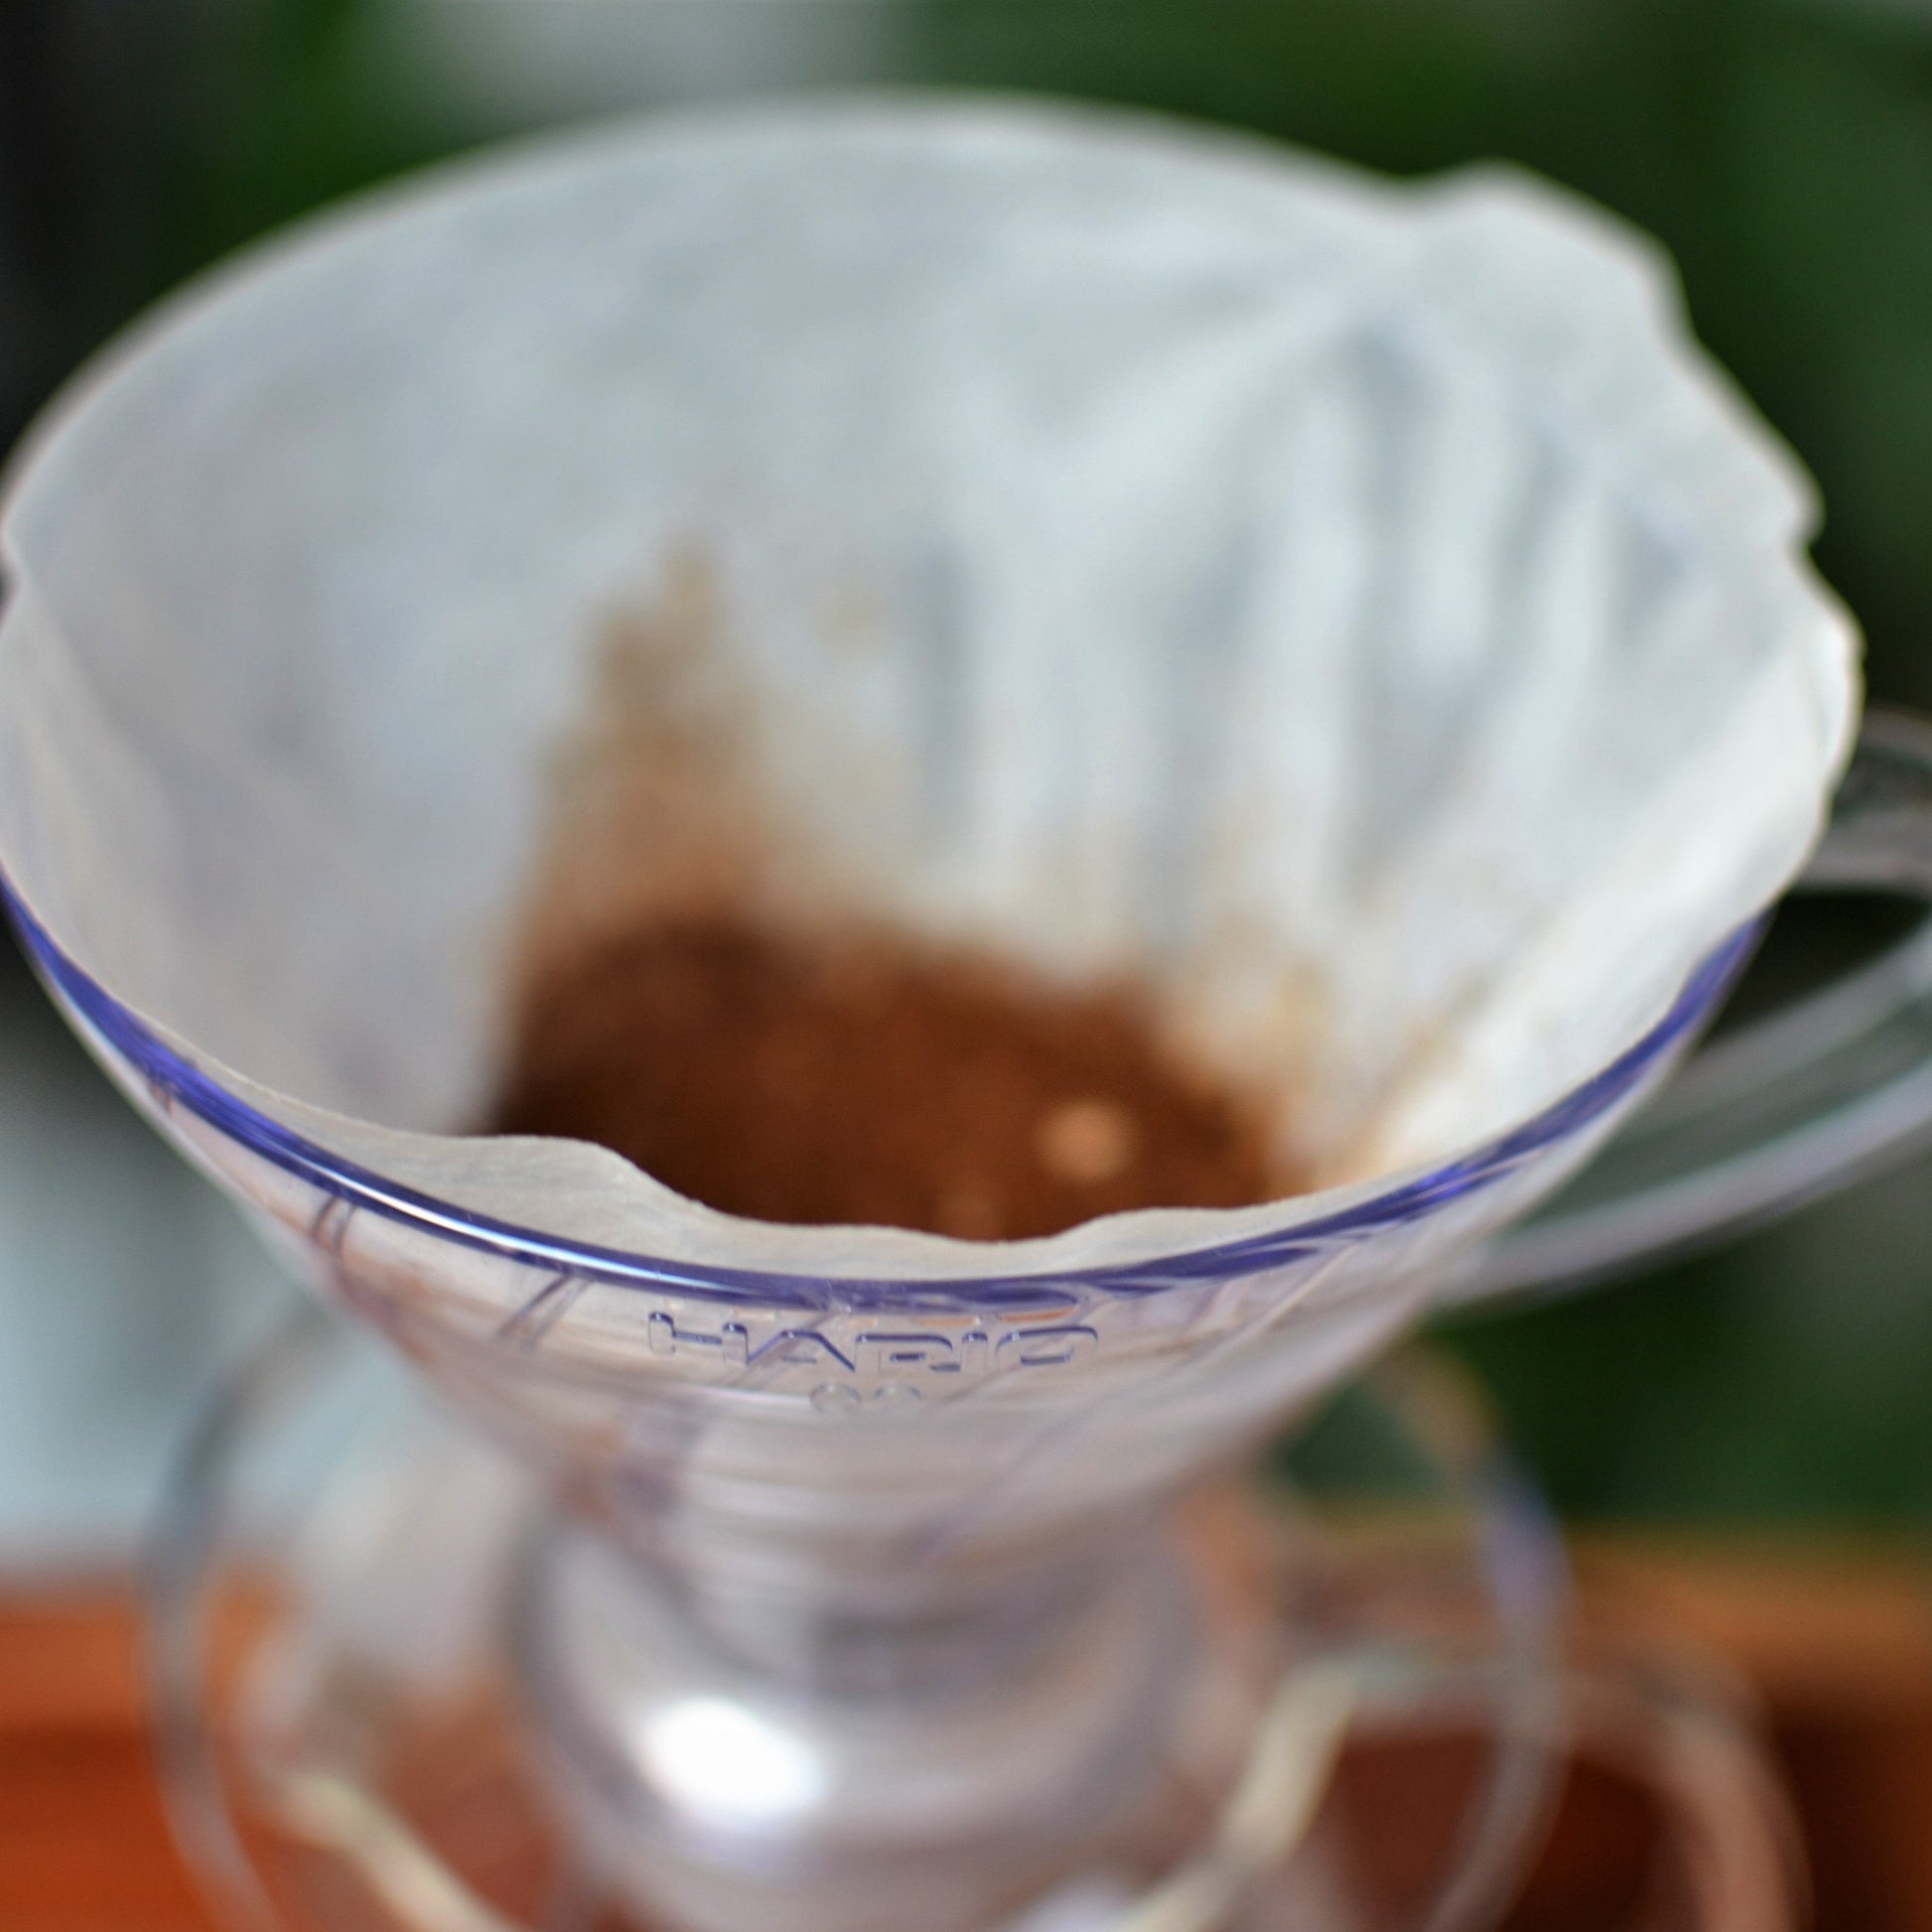 hario v60 dripper, pour over coffee, hario filter coffee, best coffee brewer, brewing coffee